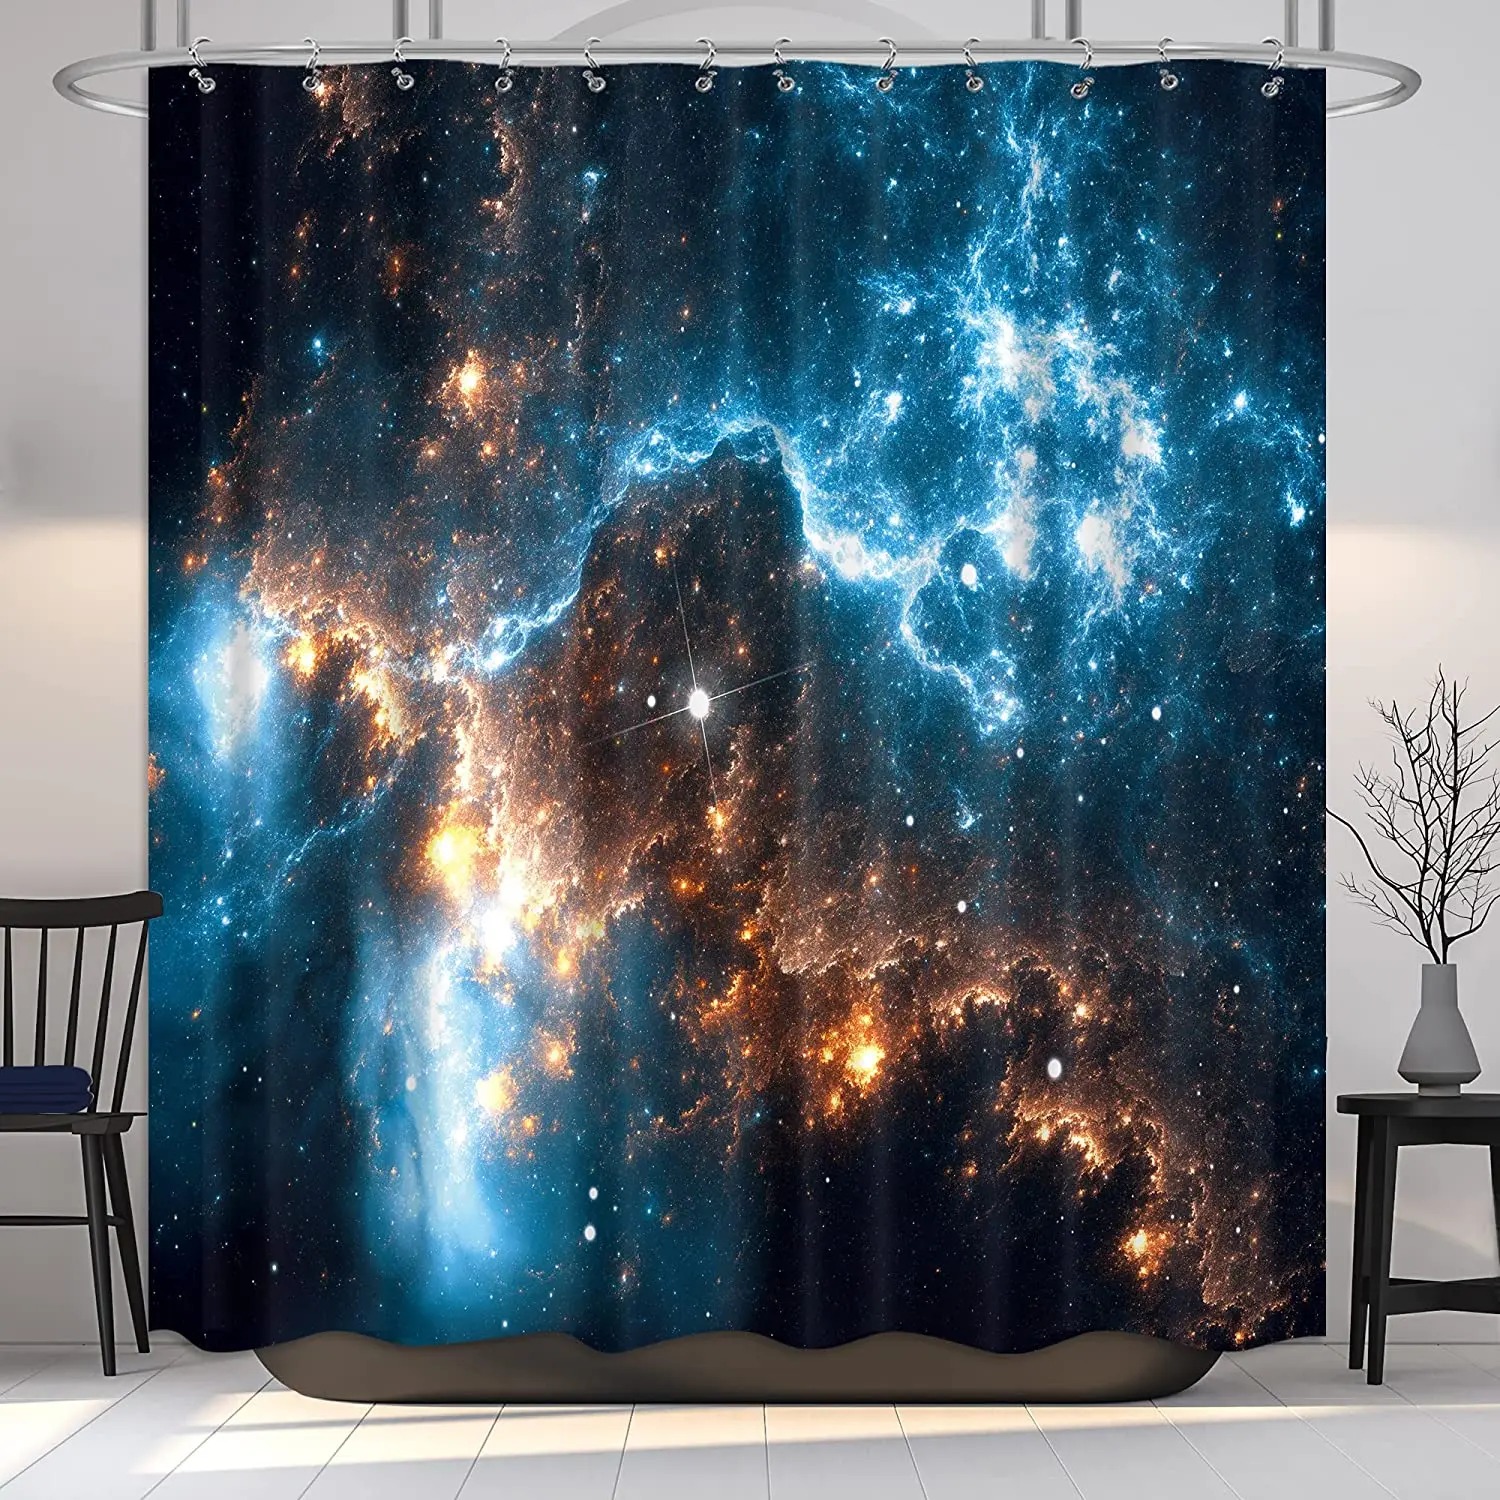 

Star Galaxy Planet Shower Curtain Nebula Night Starry Sky Universe Space Fantasy Fabric Waterproof Home Bathtub Decor 12 Hooks